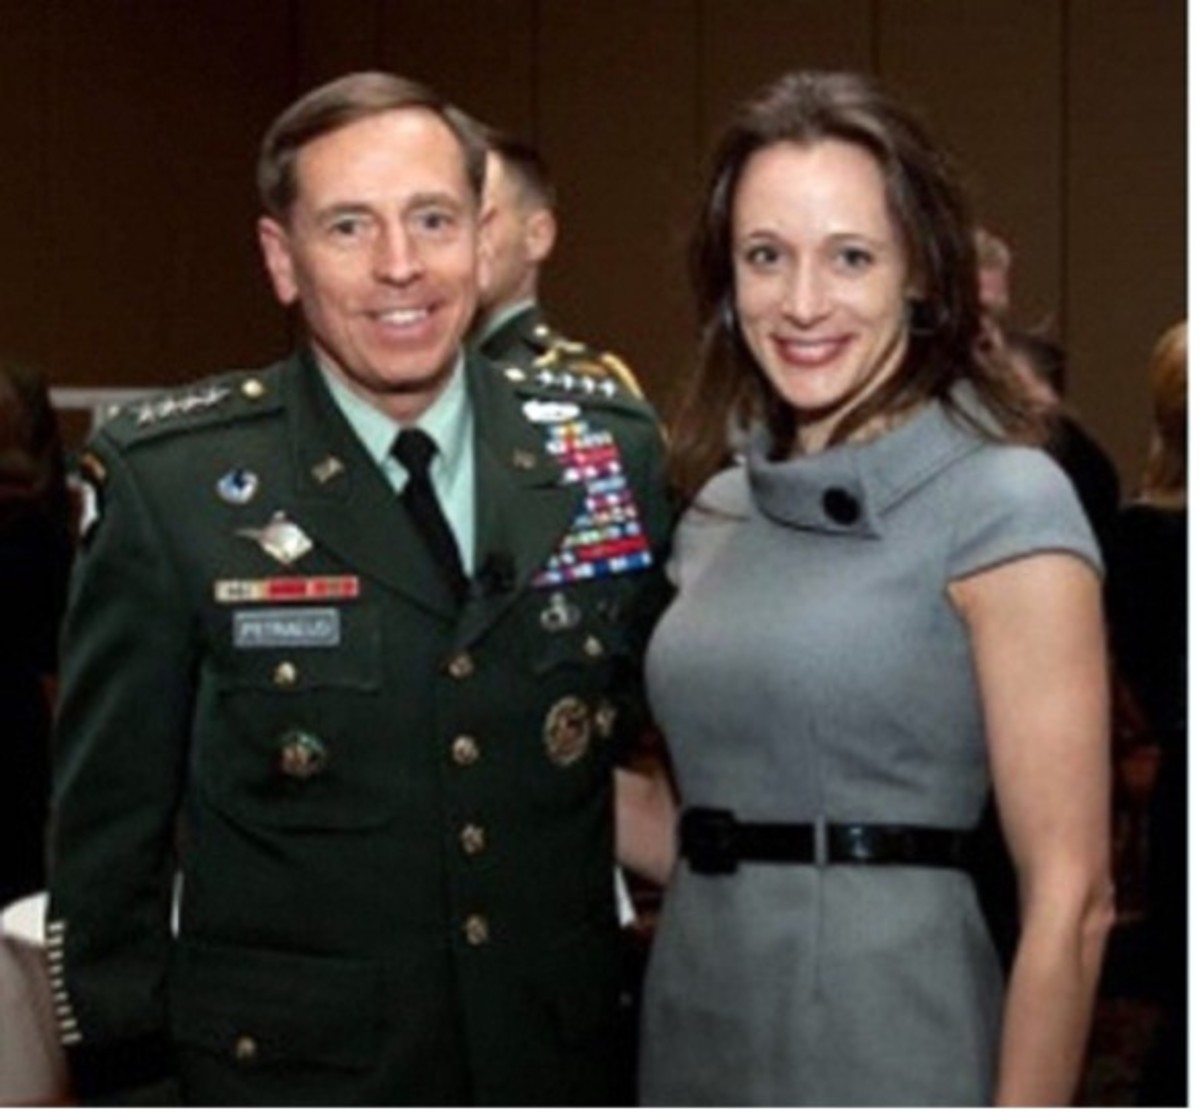 David Petraeus and his mistress Paula Broadwell, to whom he leaked classified documents. [Source: ibtimes.co.uk]